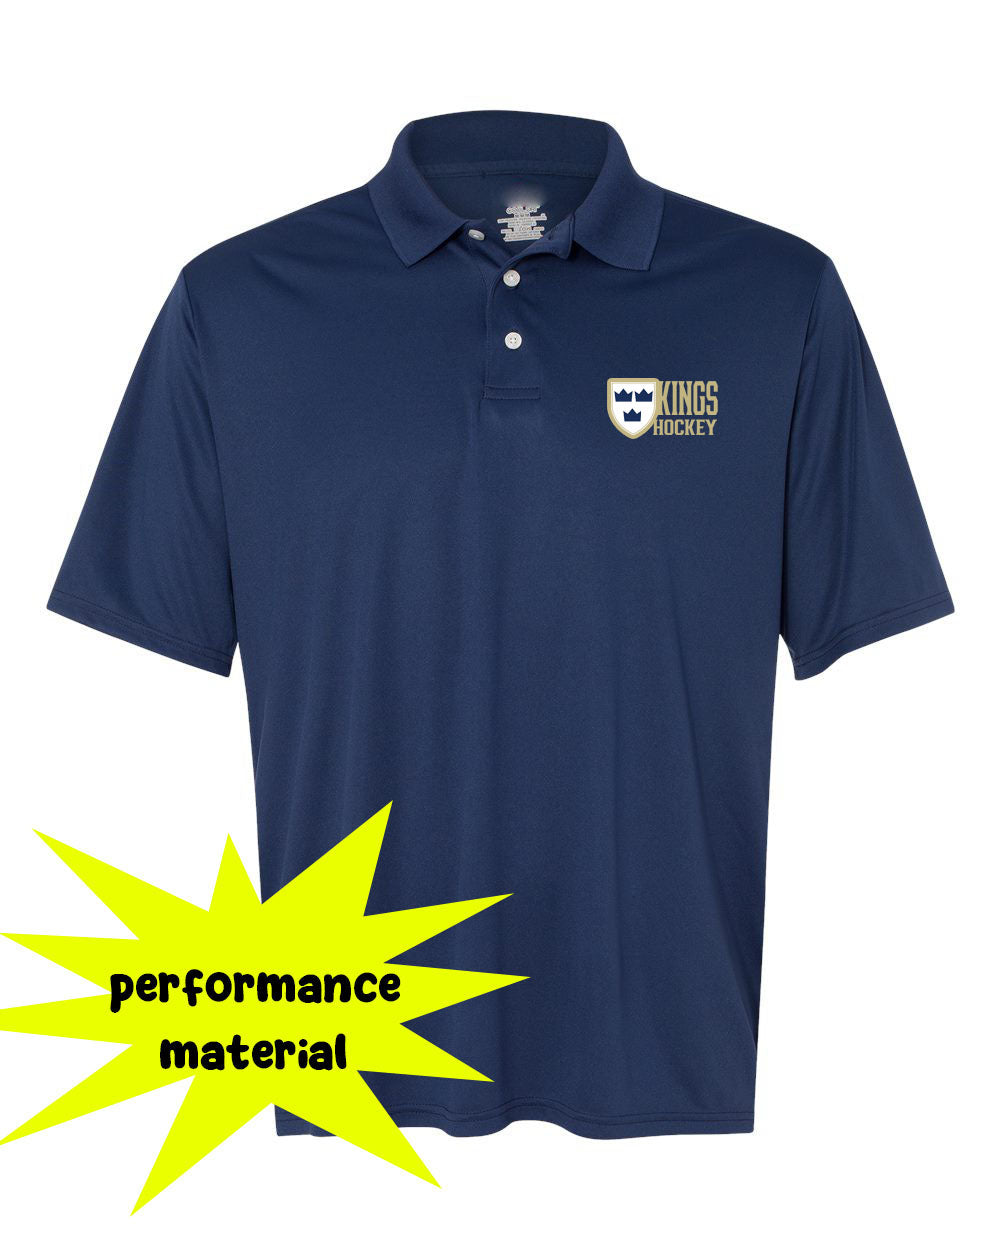 Kings Hockey Design 4 Performance Material Polo T-Shirt